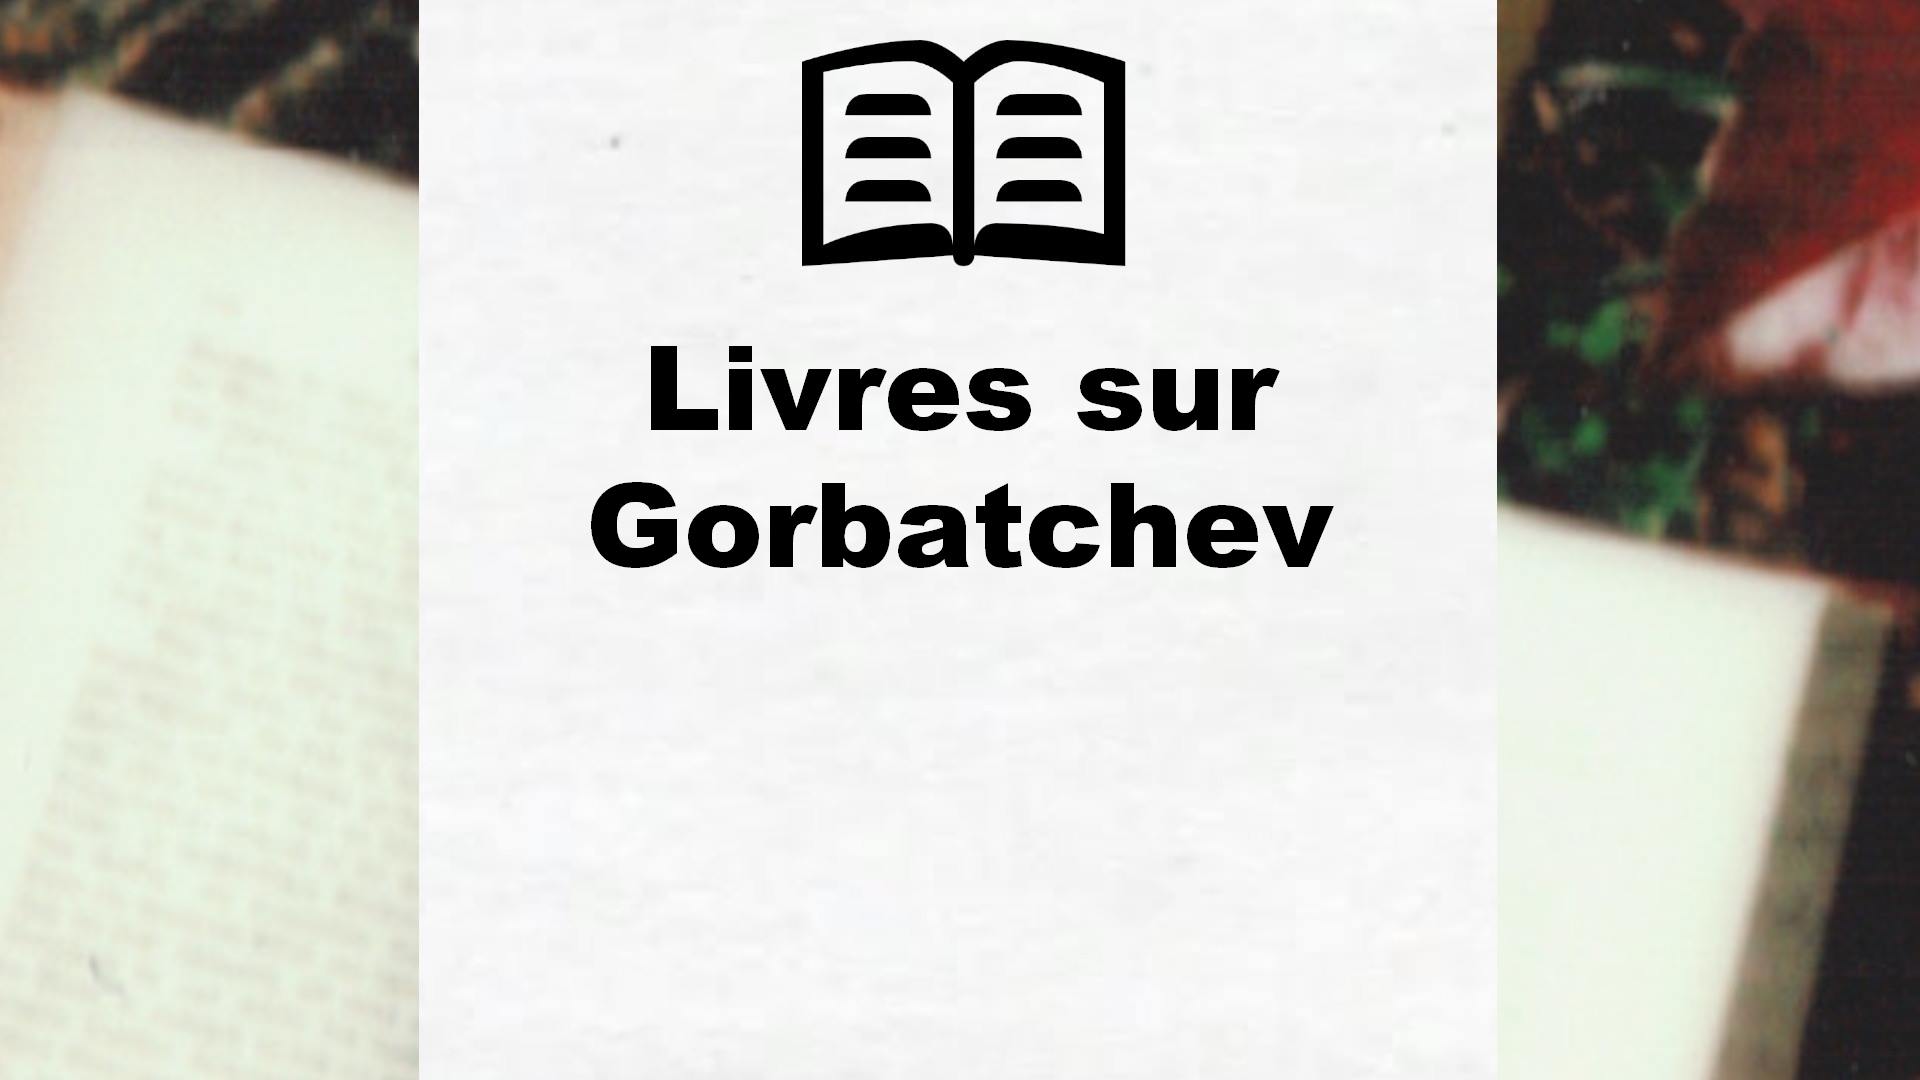 Livres sur Gorbatchev